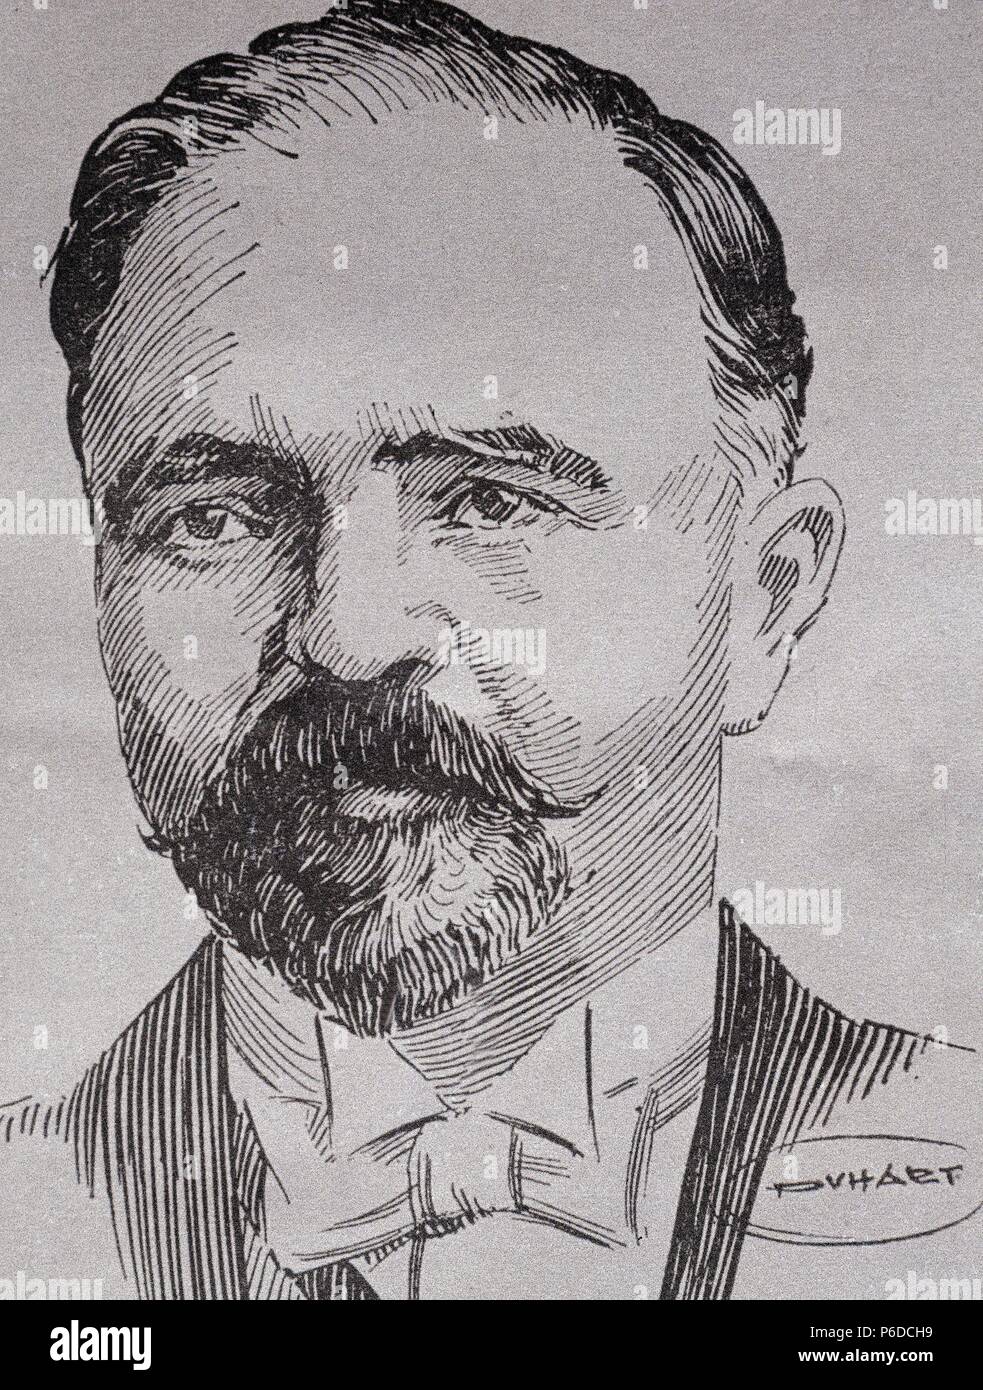 FRANCISCO MADERO. POLITICO MEXICANO.1873-1913. Stock Photo